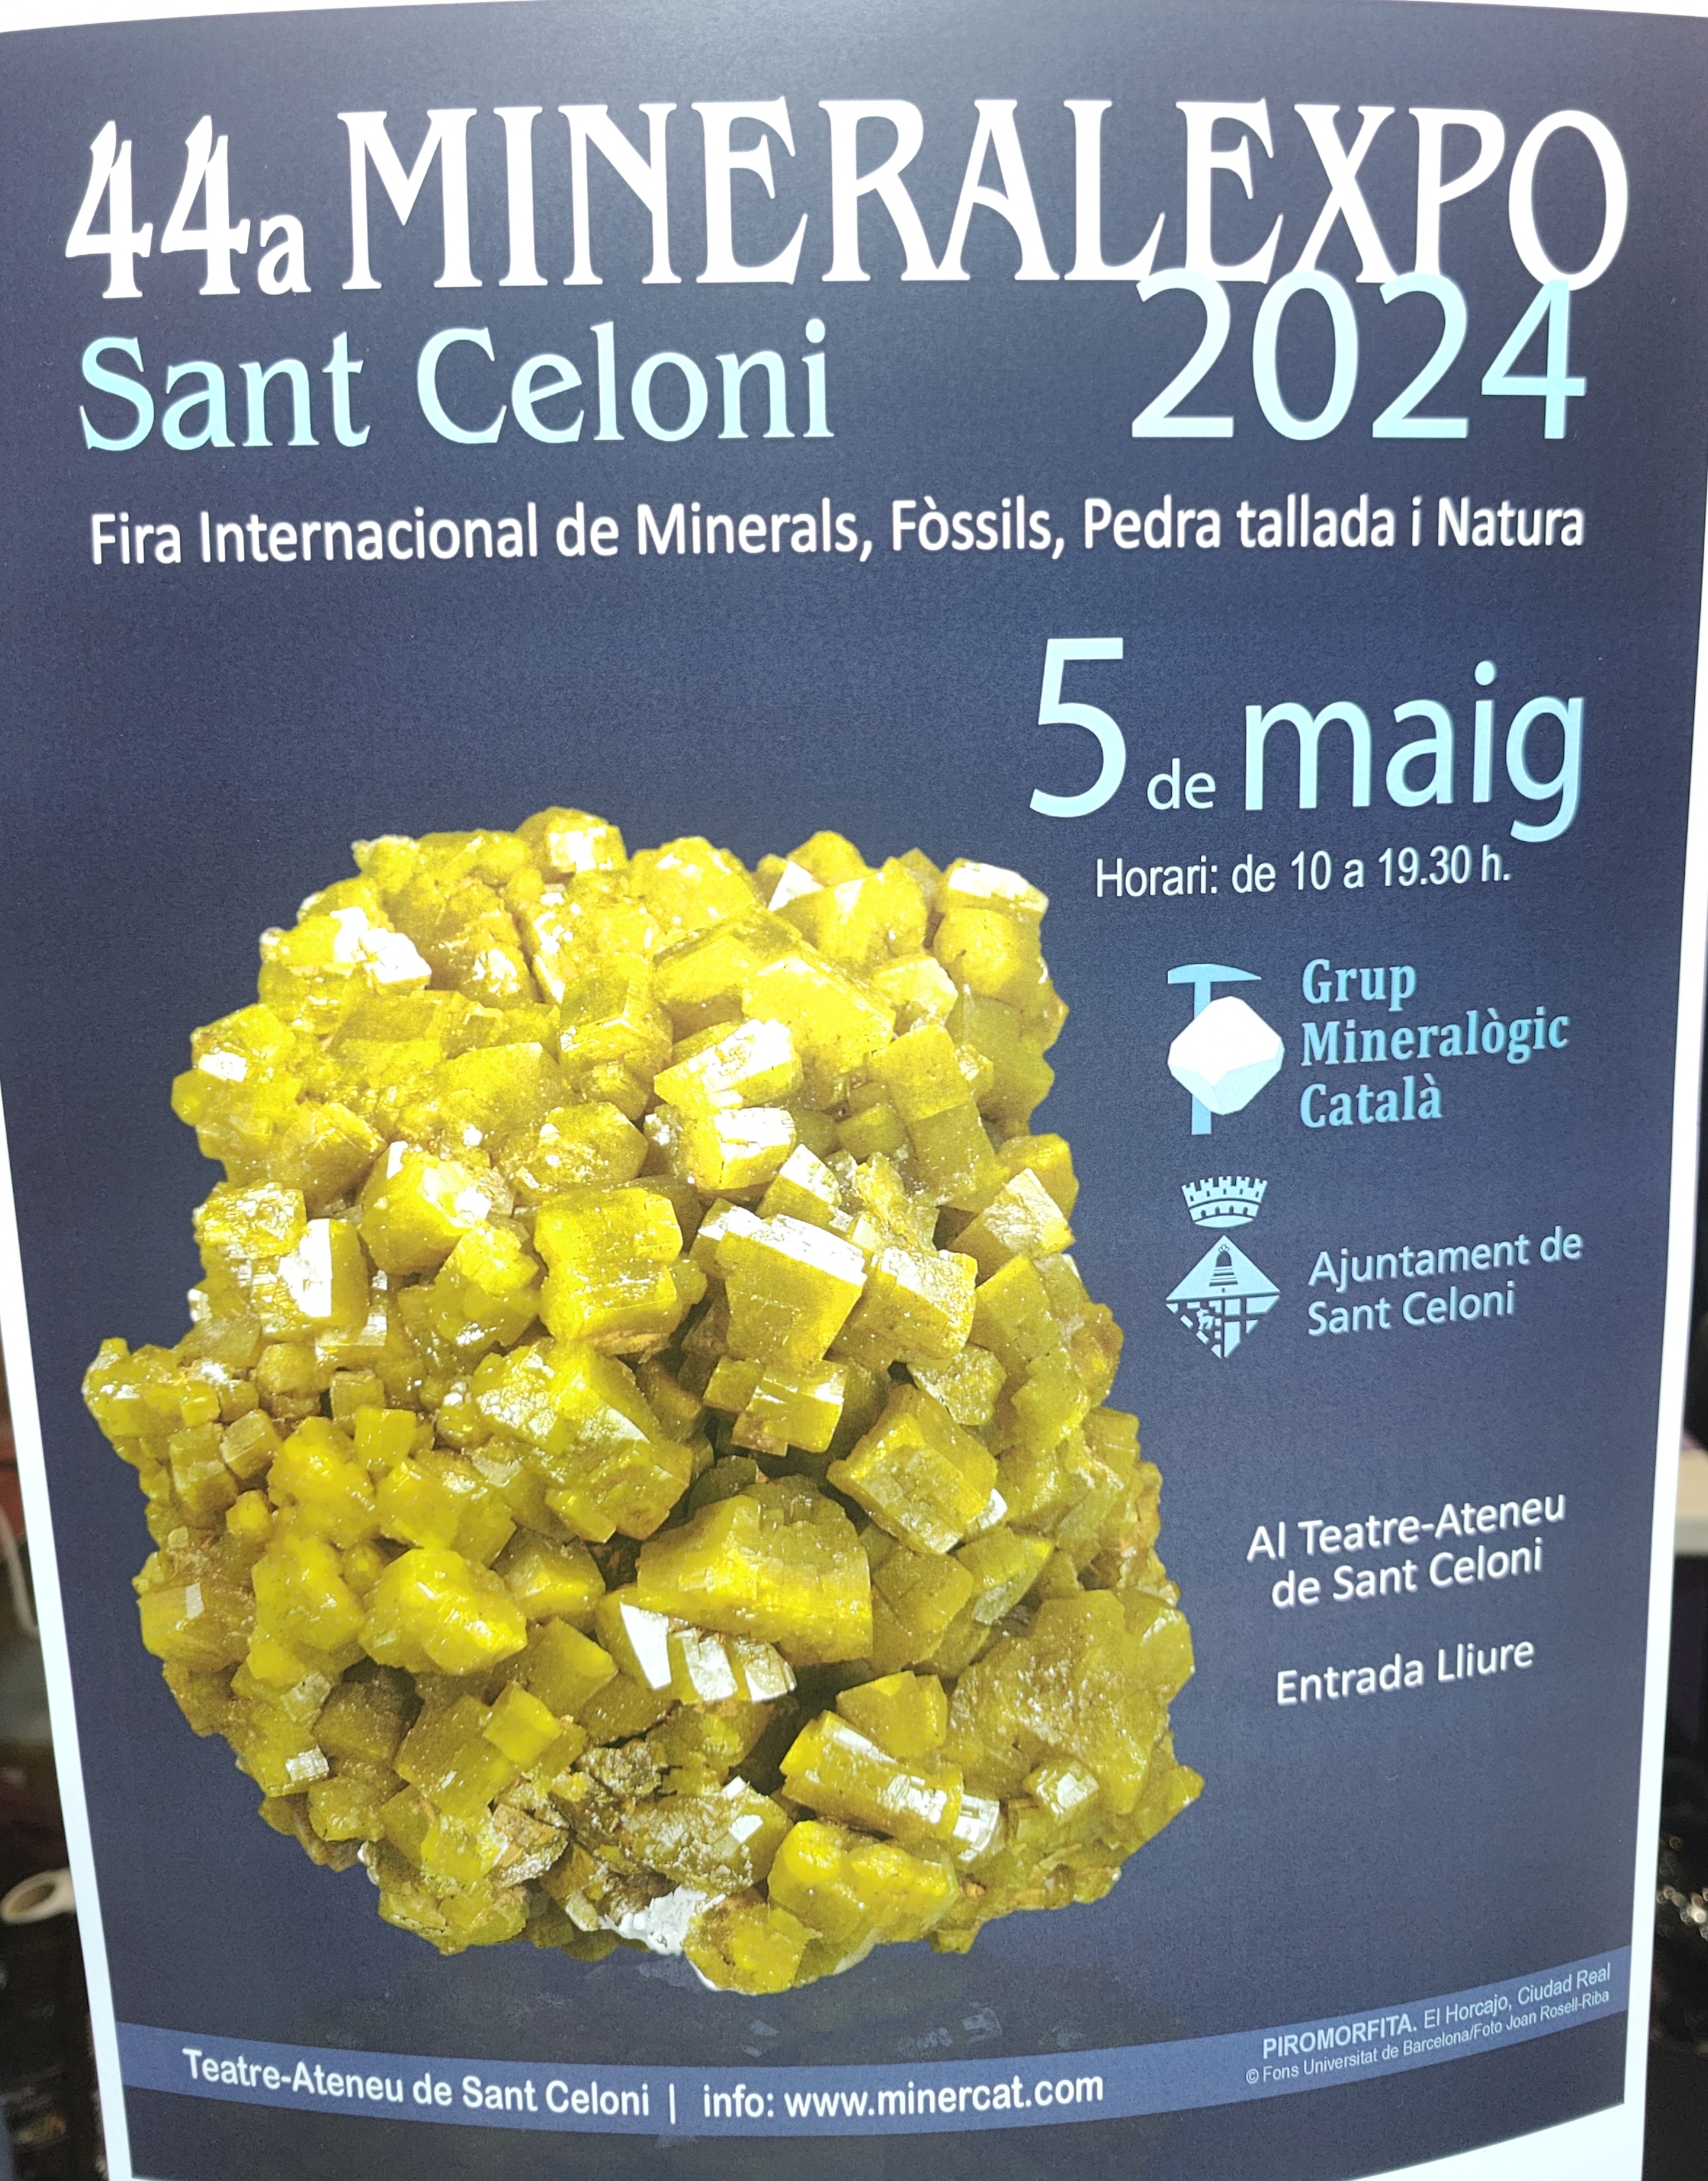 MineralExpo Sant Celoni 2024